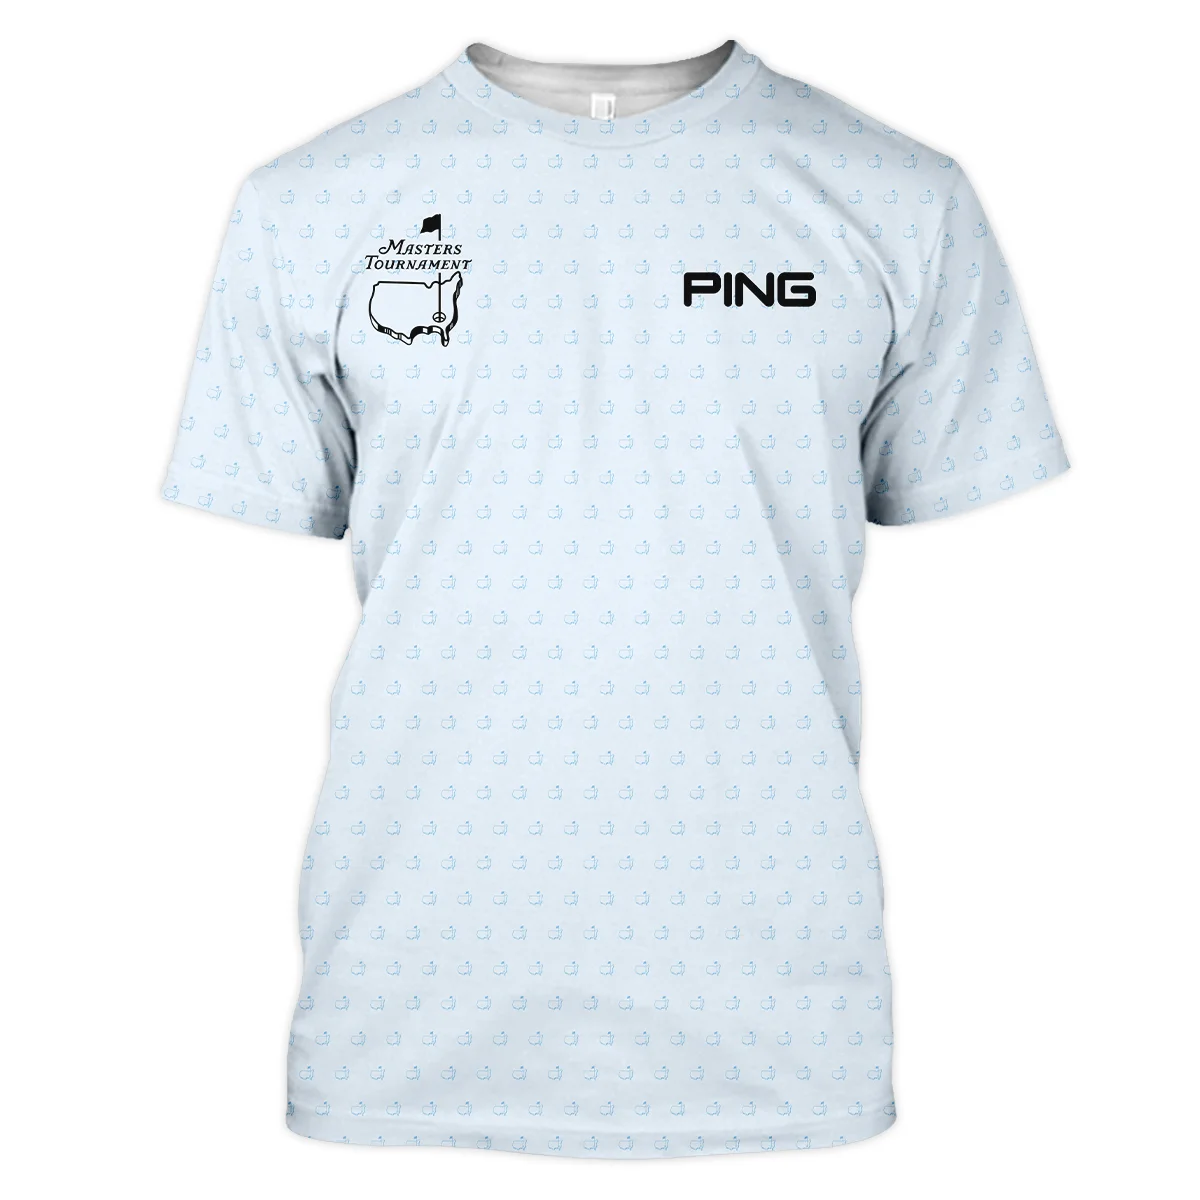 Pattern Masters Tournament Ping Long Polo Shirt White Light Blue Color Pattern Logo  Long Polo Shirt For Men